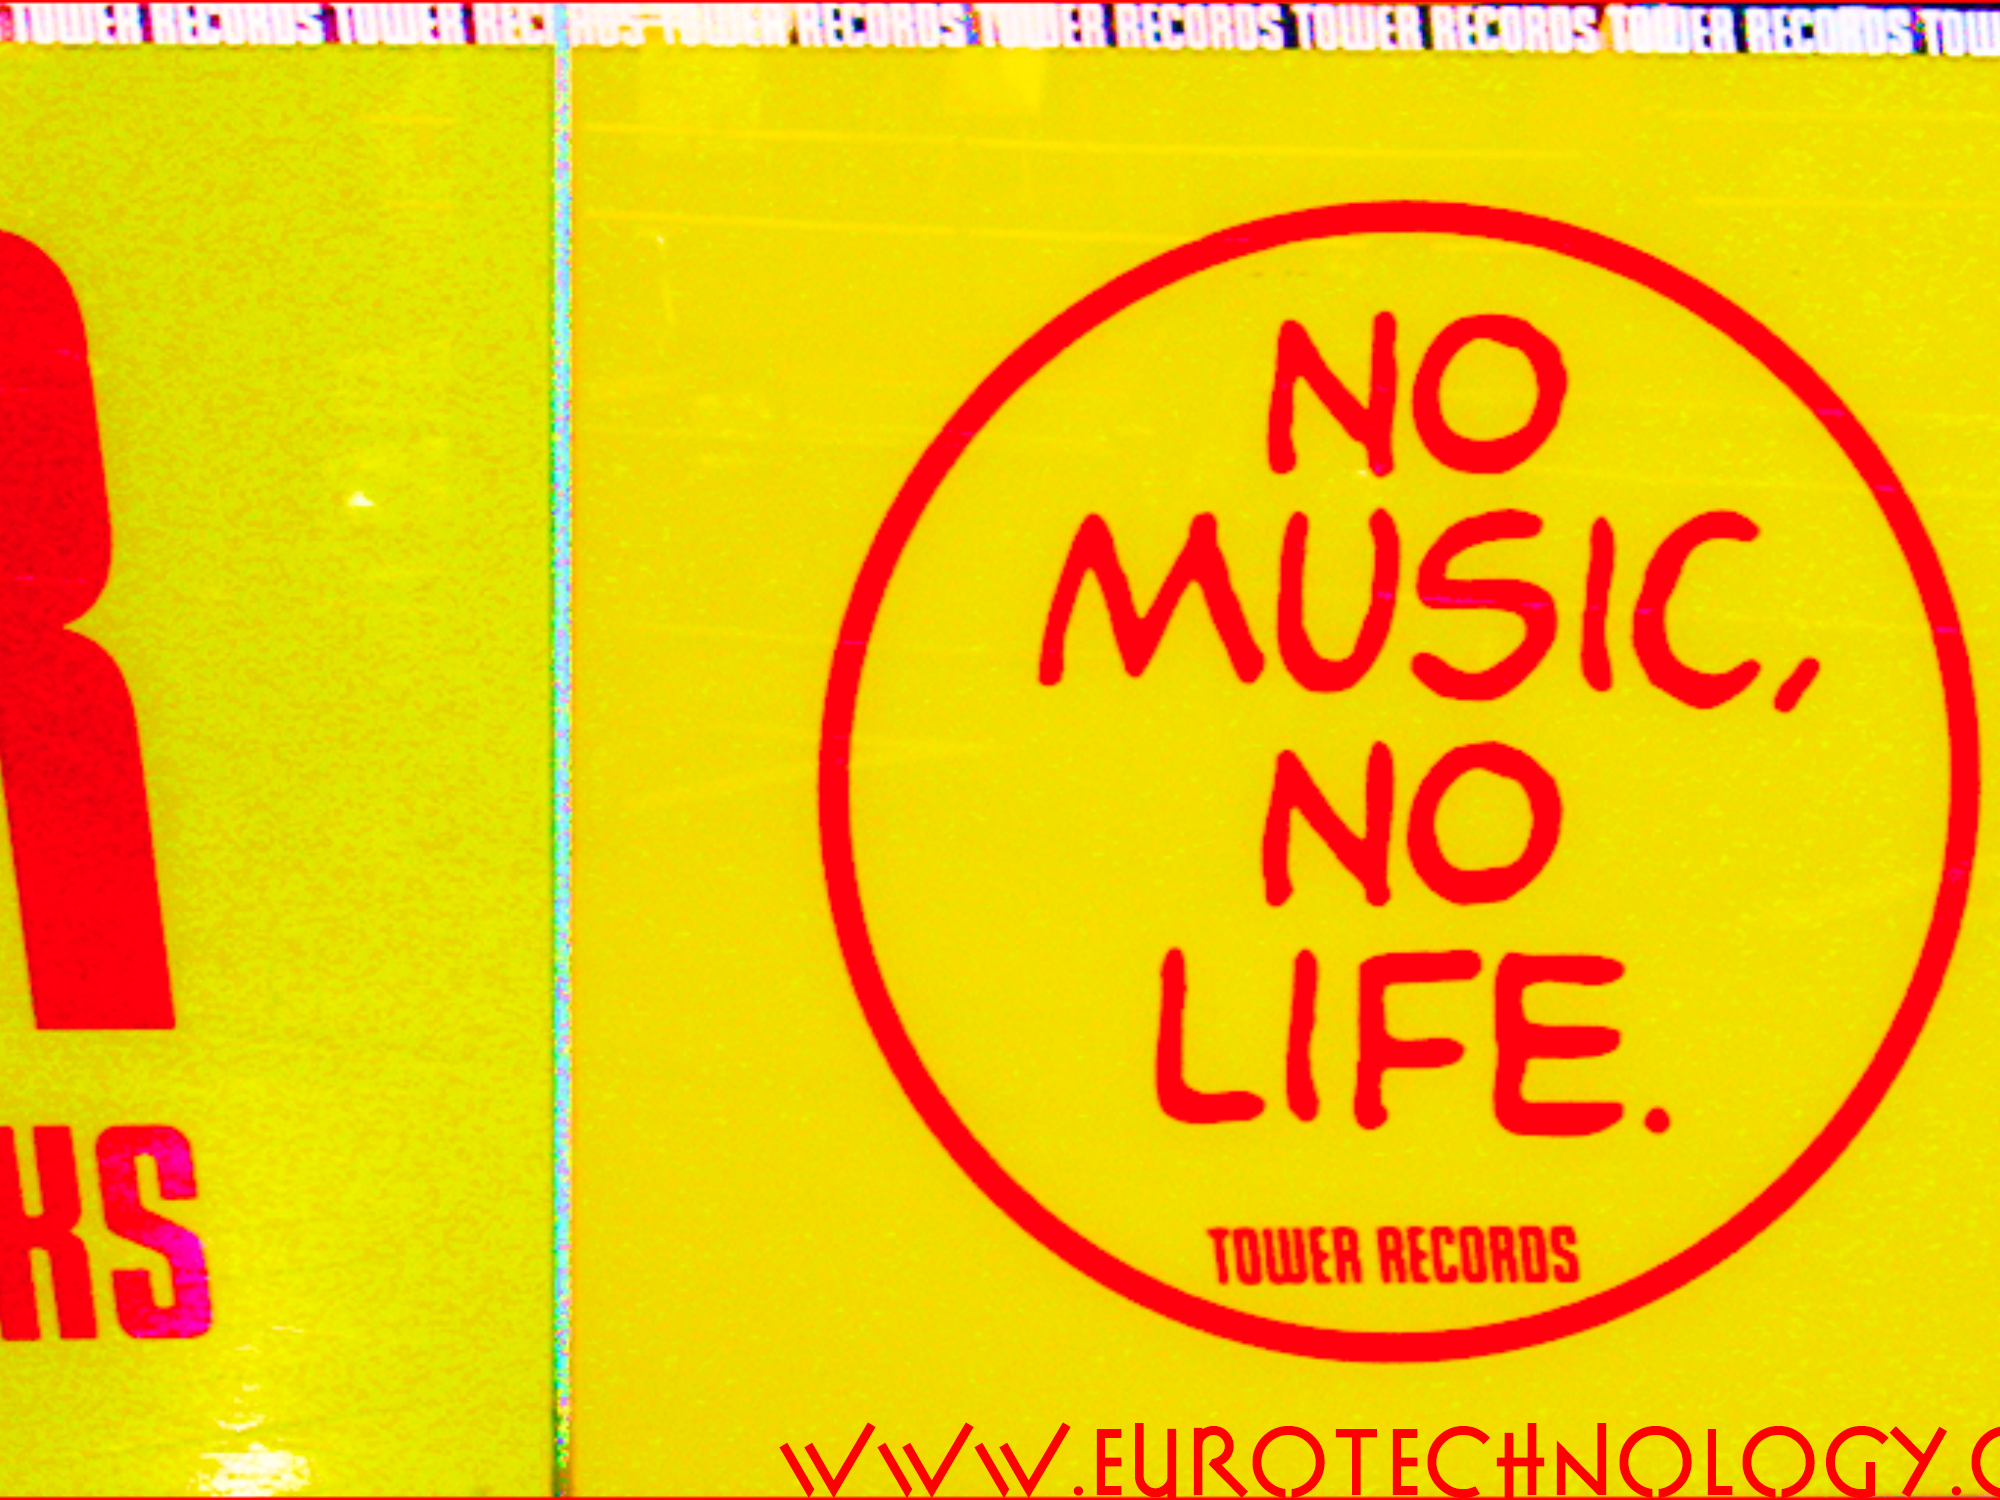 NTT Docomo acquisitions: Tower Records – No music, no life!